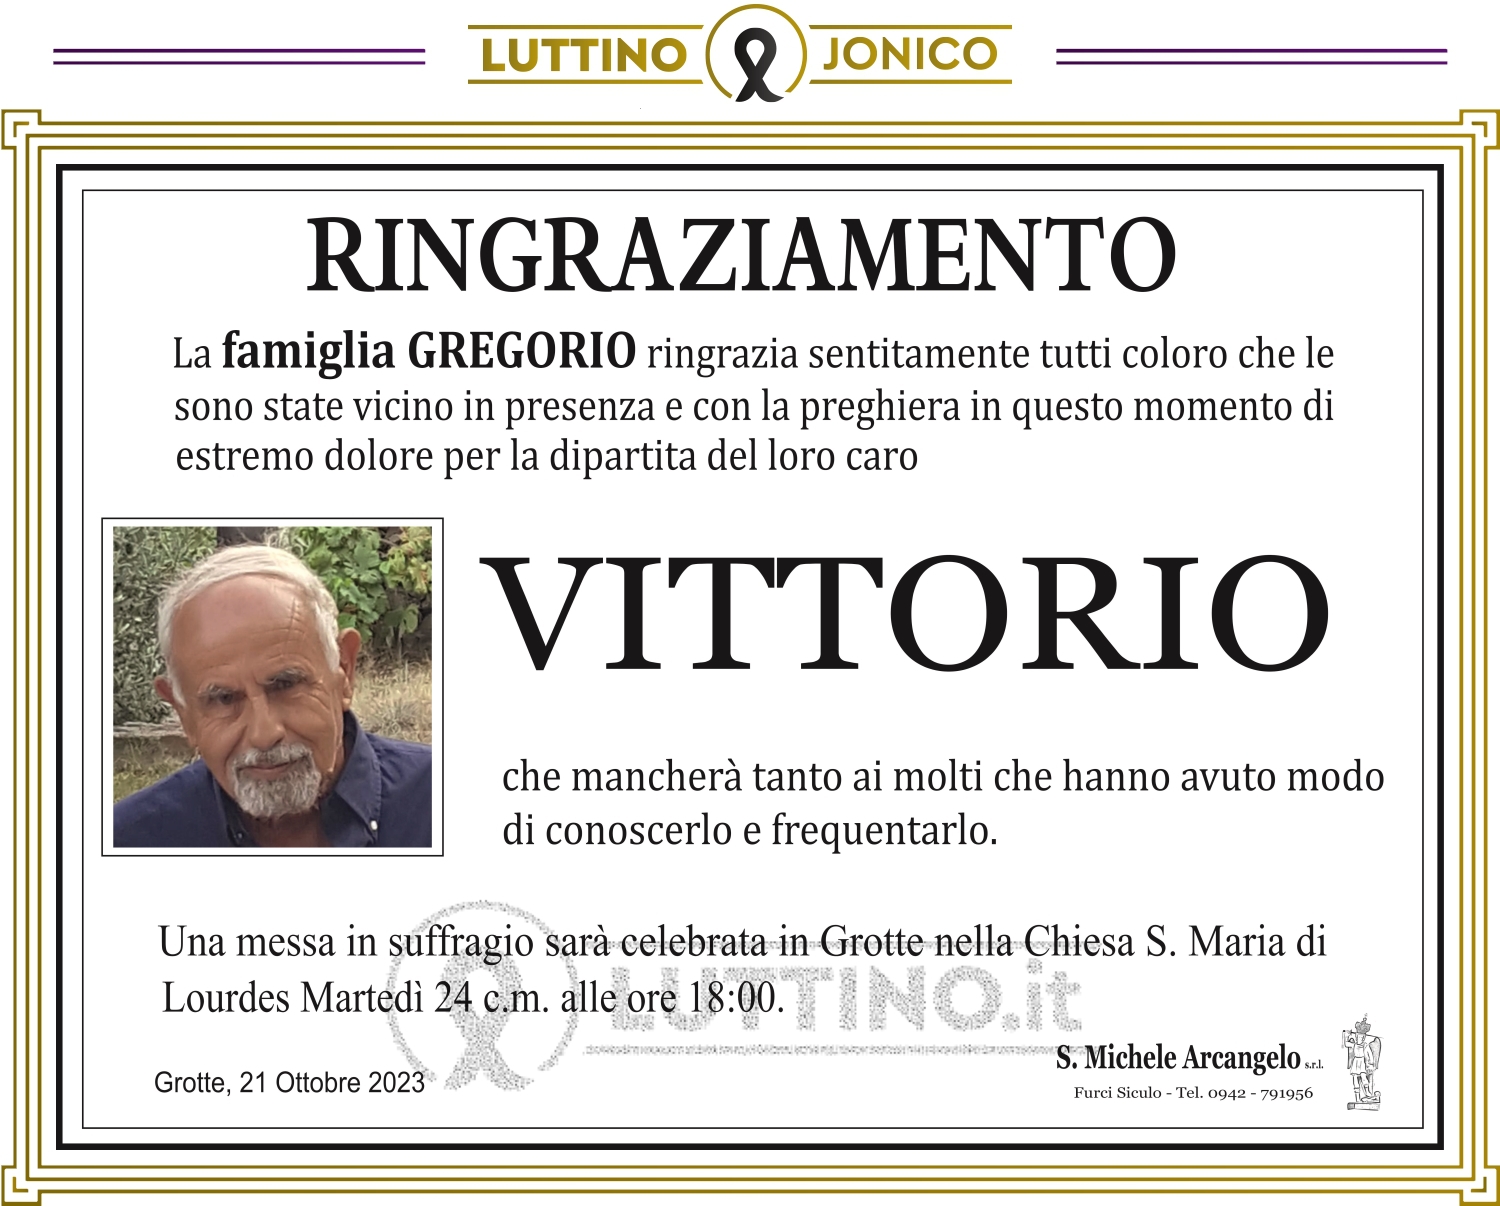 Vittorio Gregorio